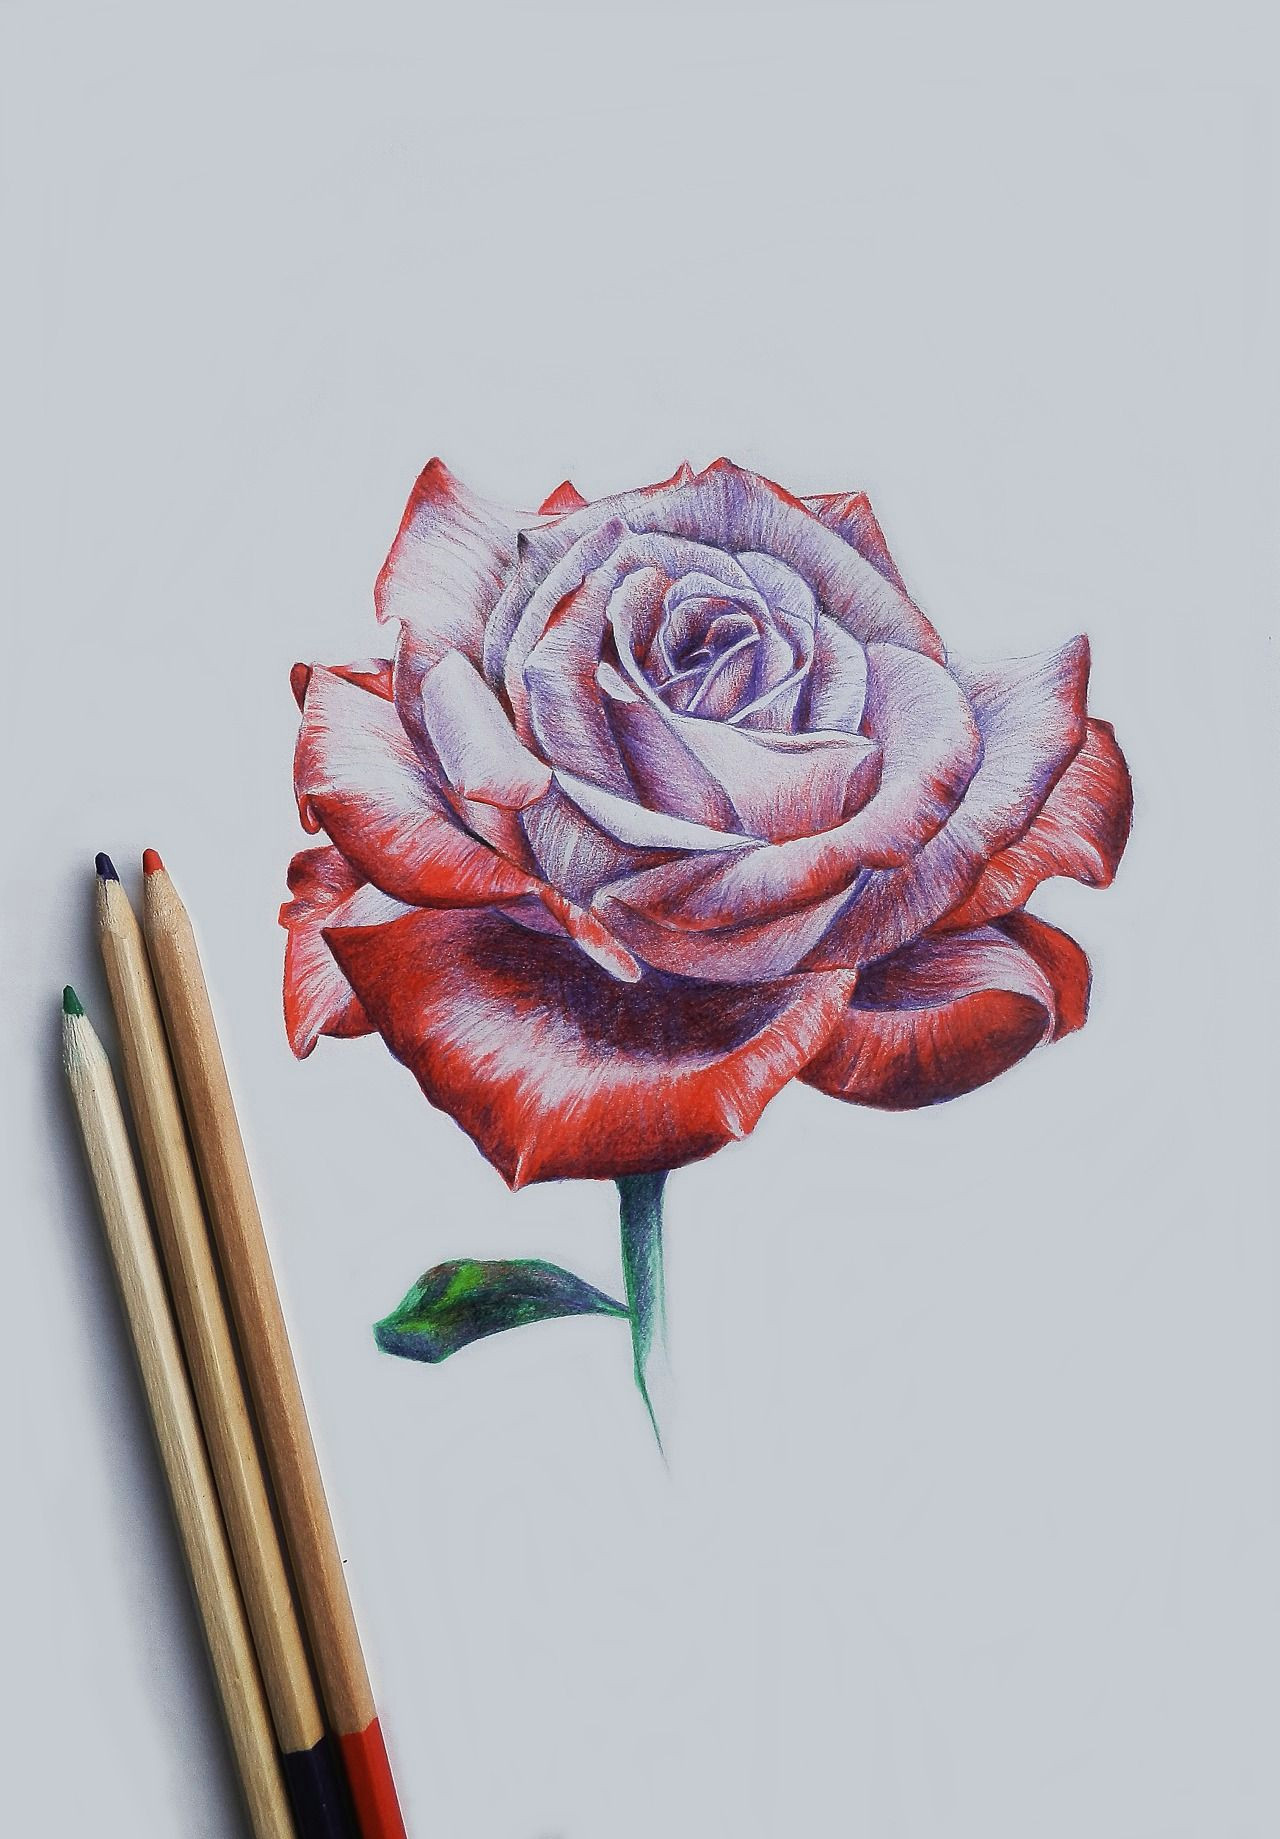 Tonal Drawings Of Roses Drawing Rose Art Drawi